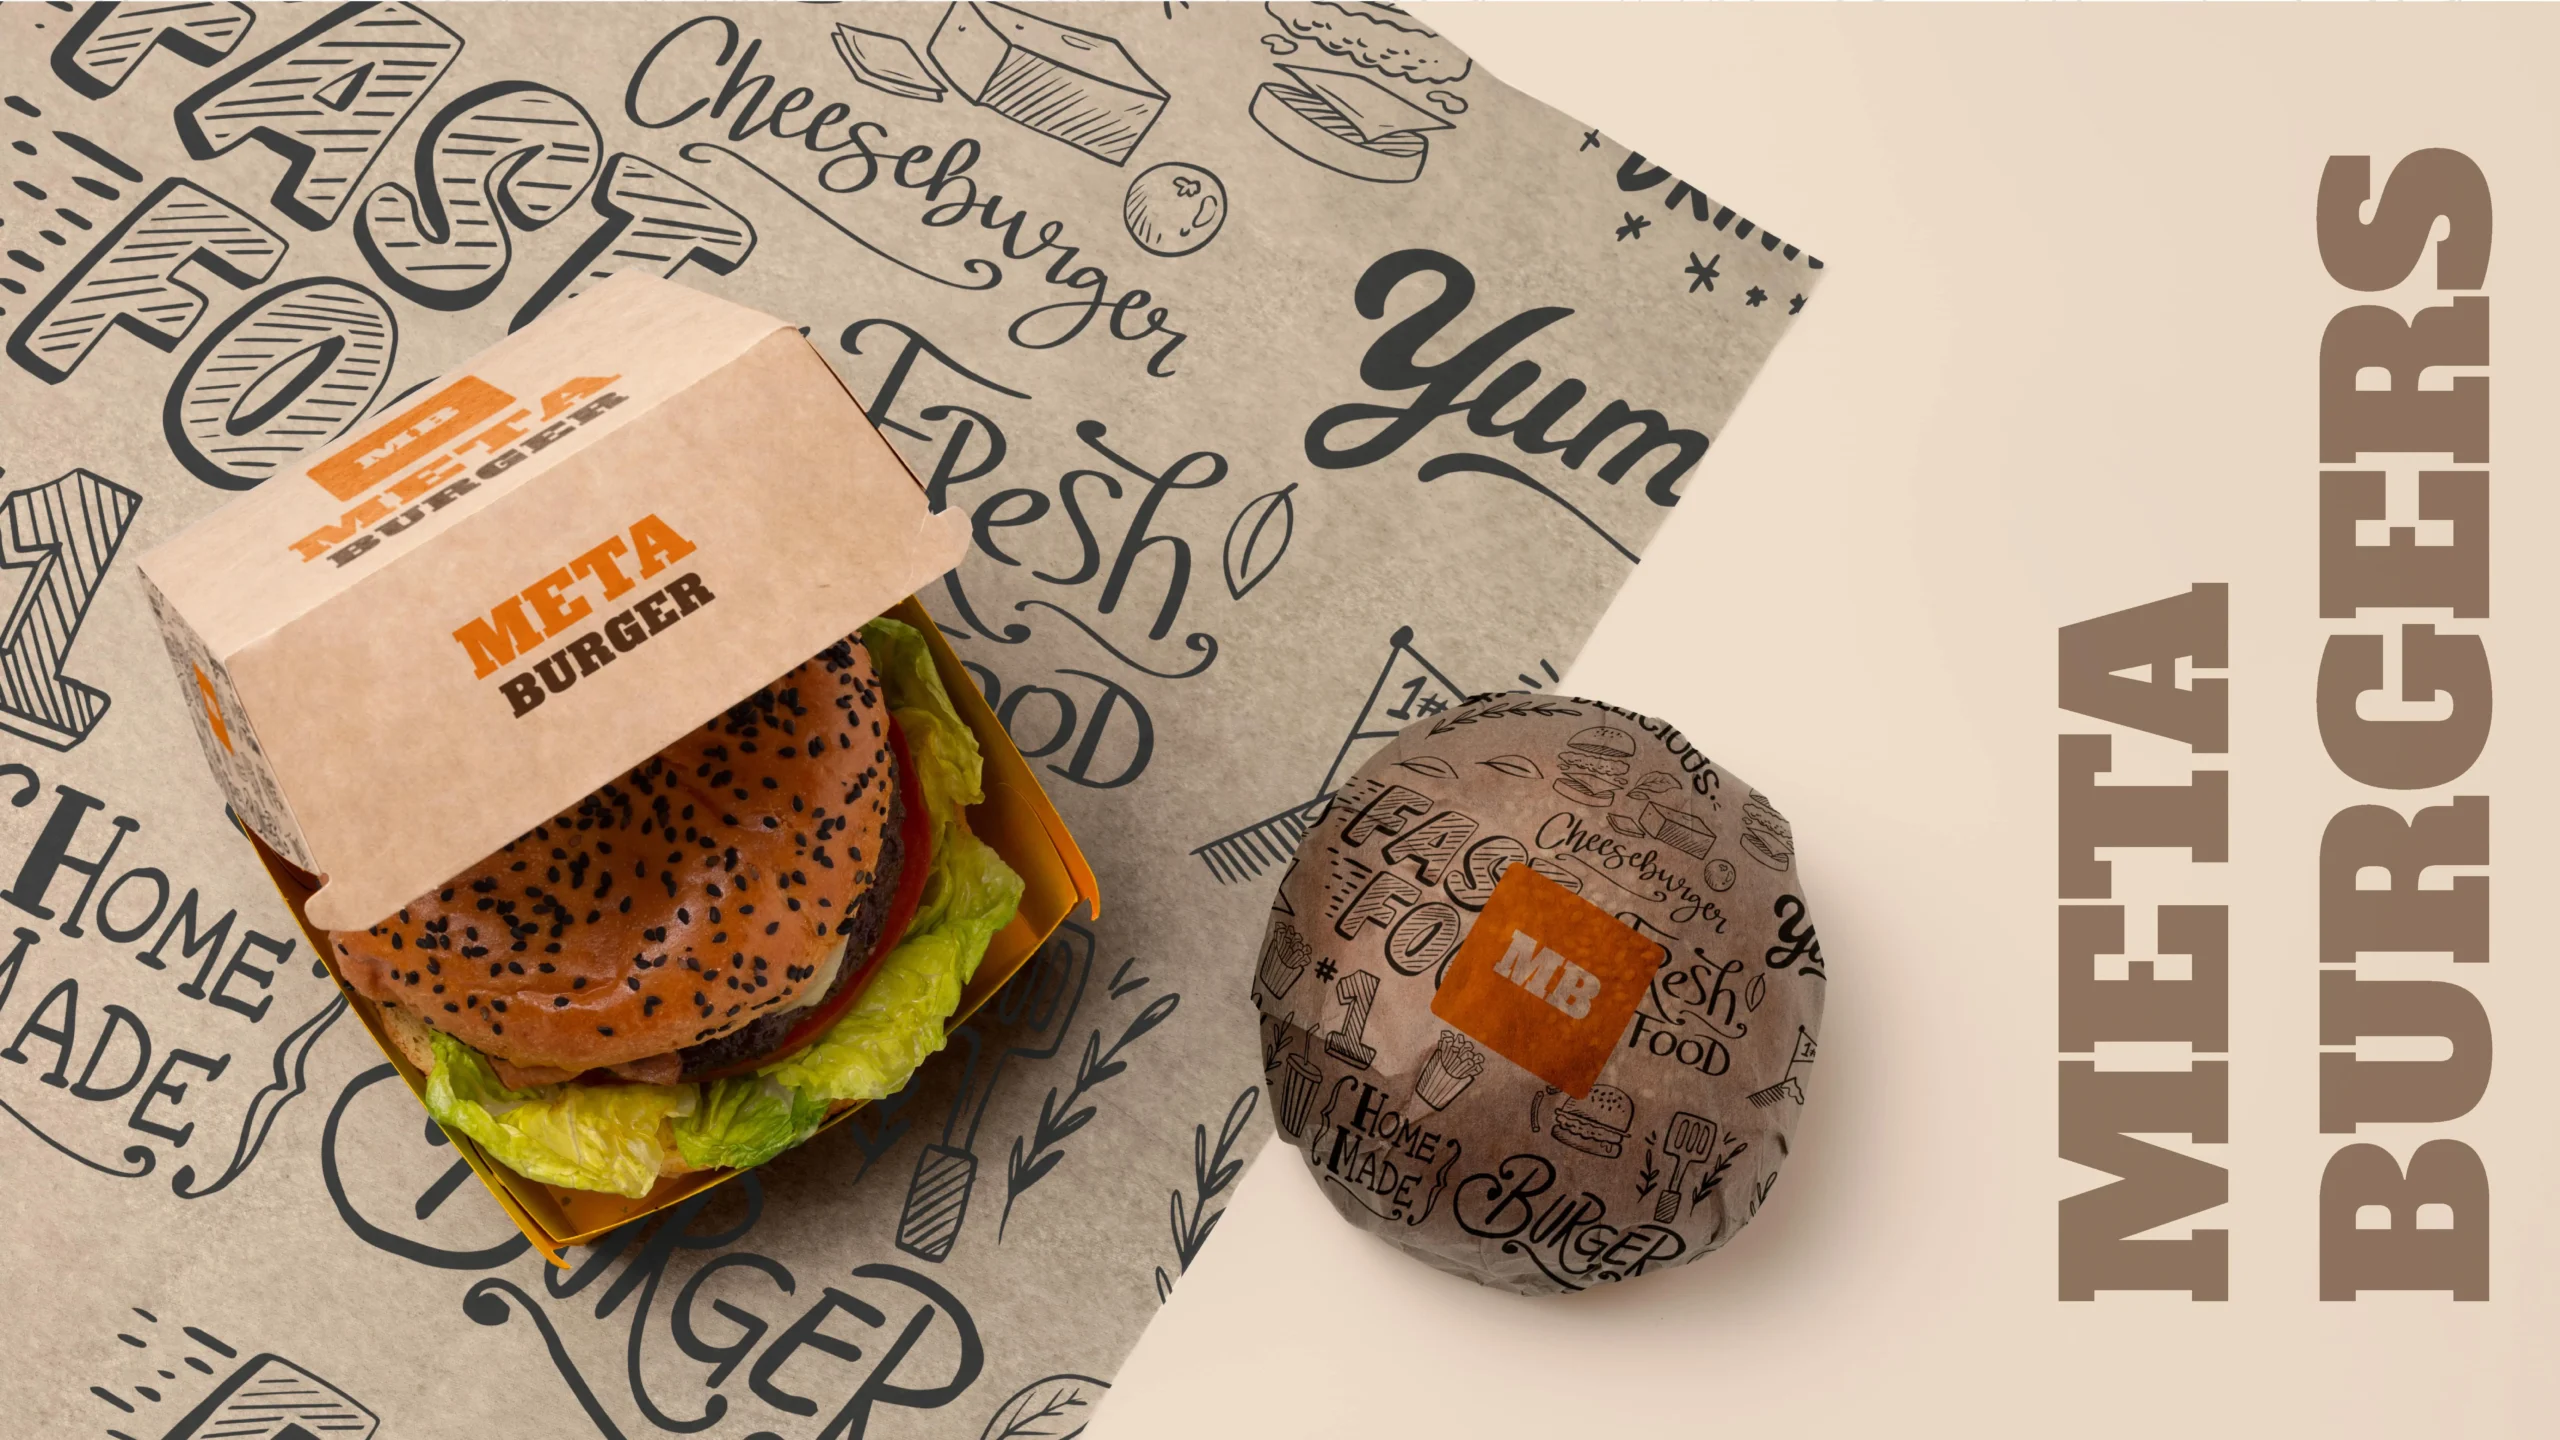 Meta Burger Innovative Brand Identity